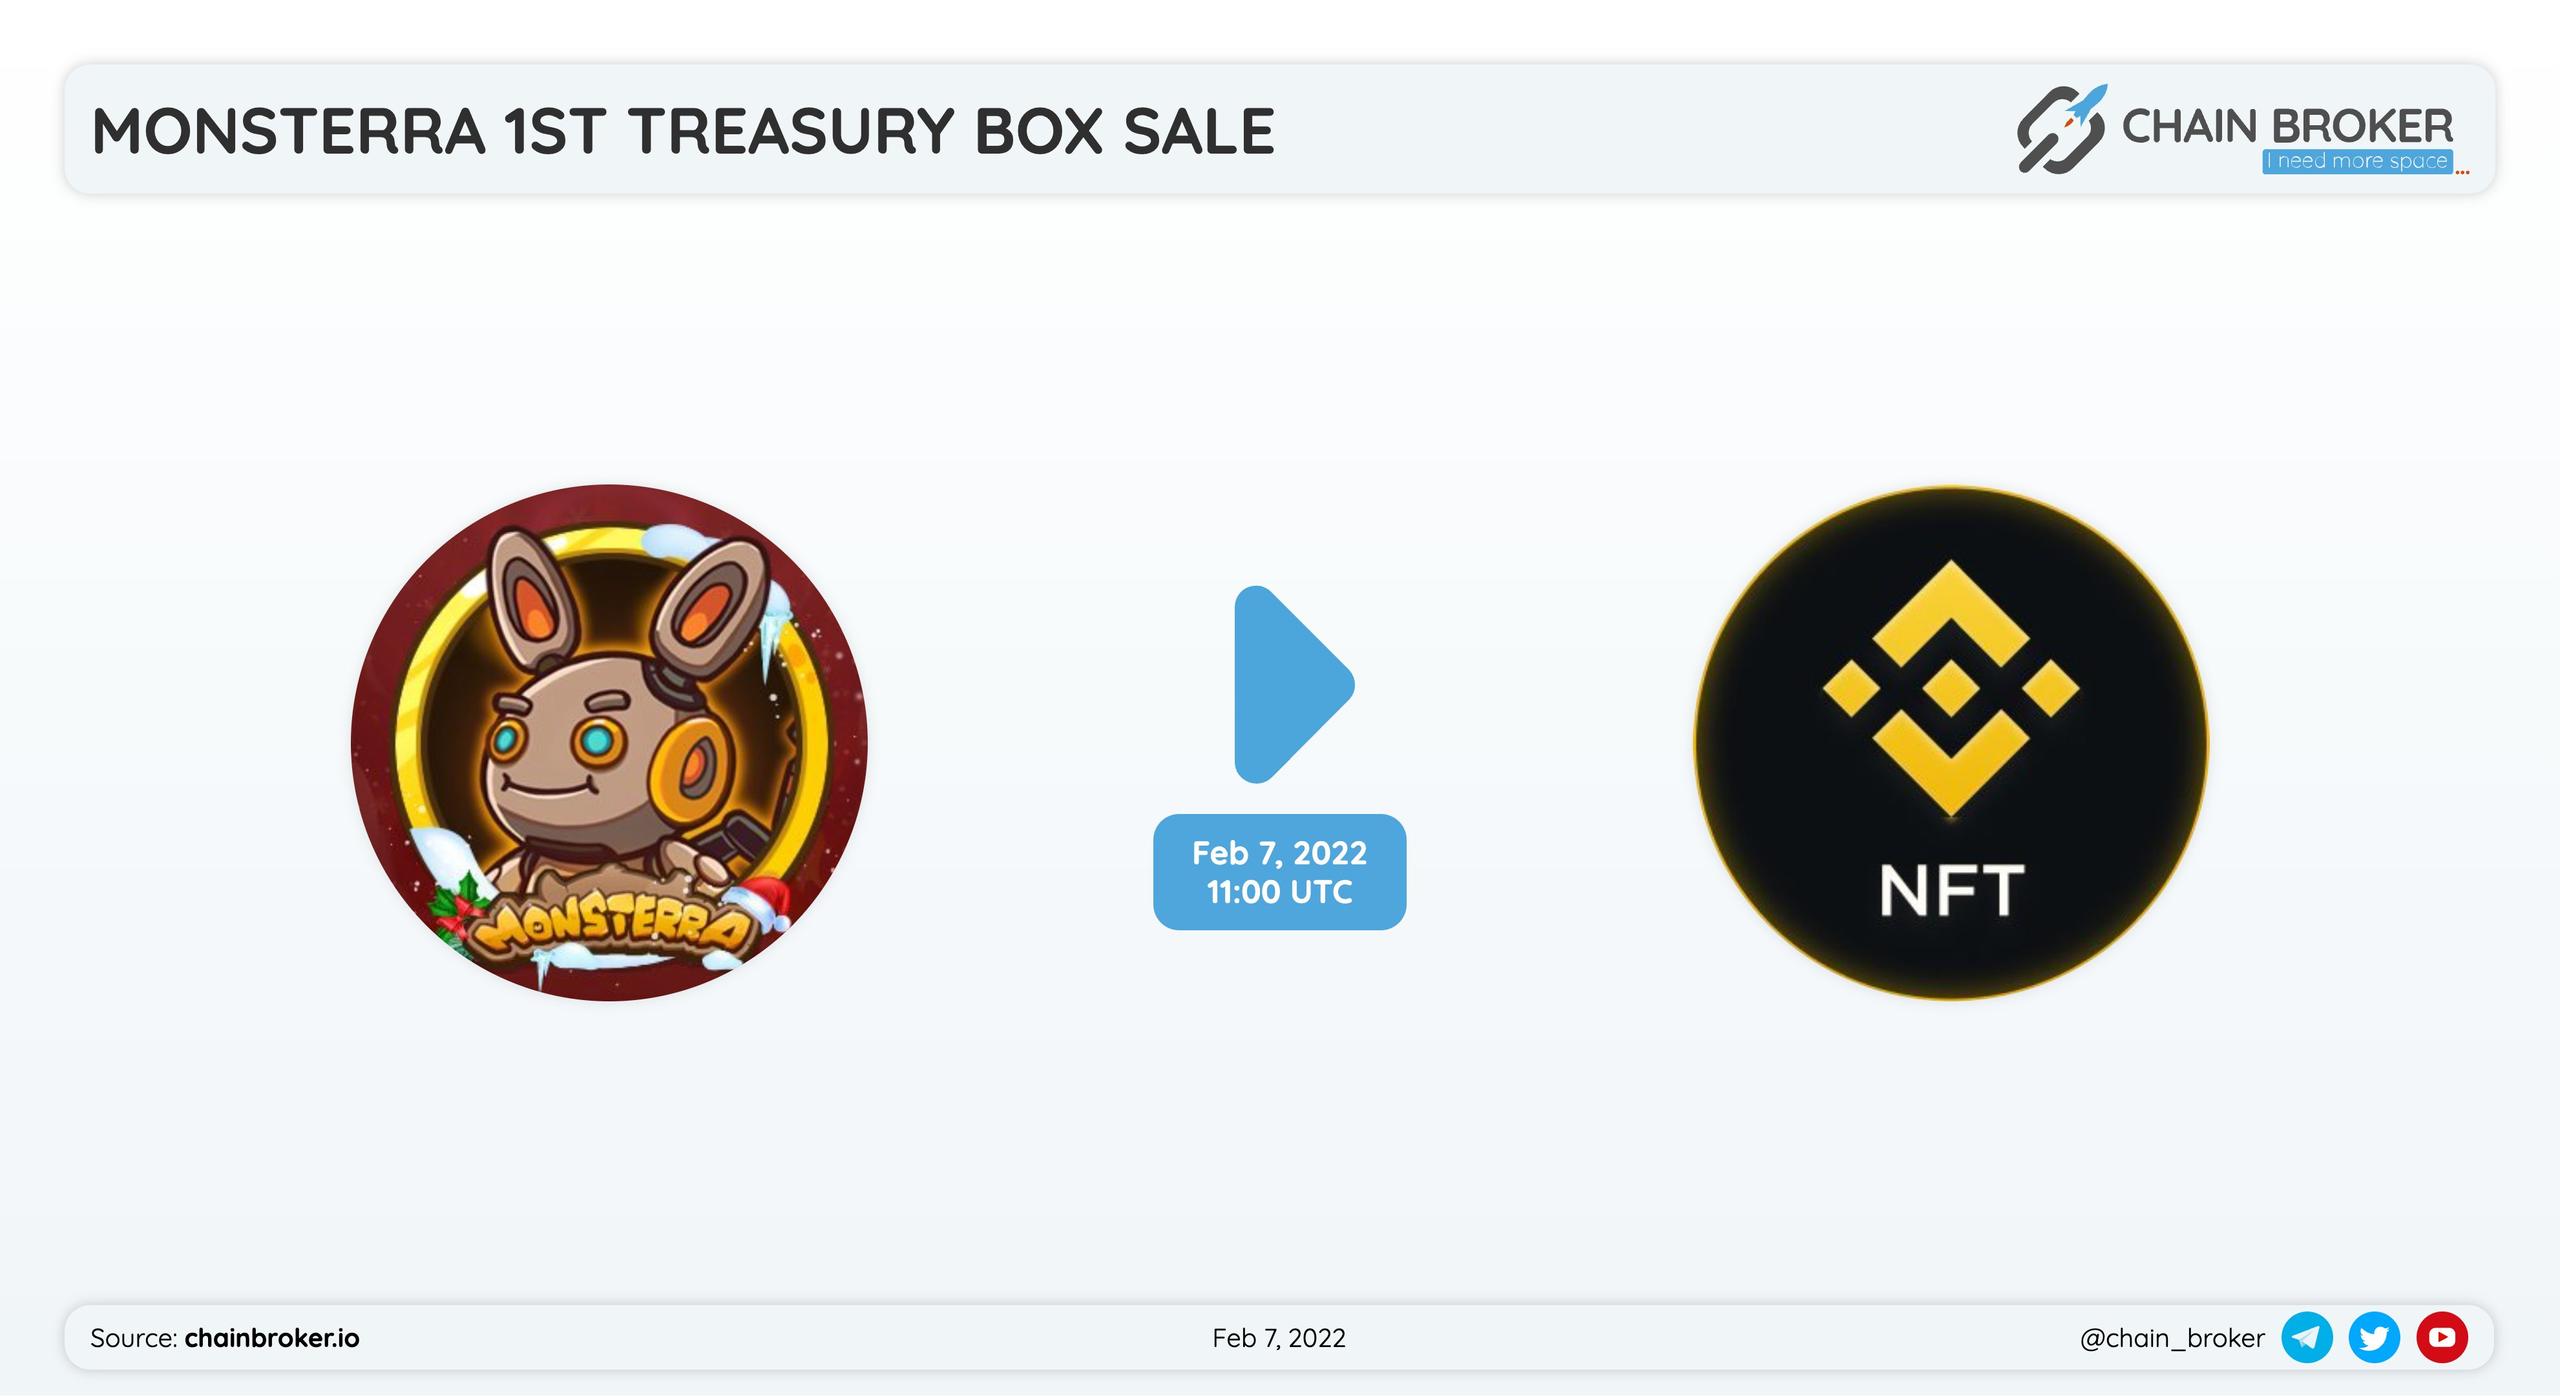 Monsterra treasury box sale on Binance NFT just in 2 hours!